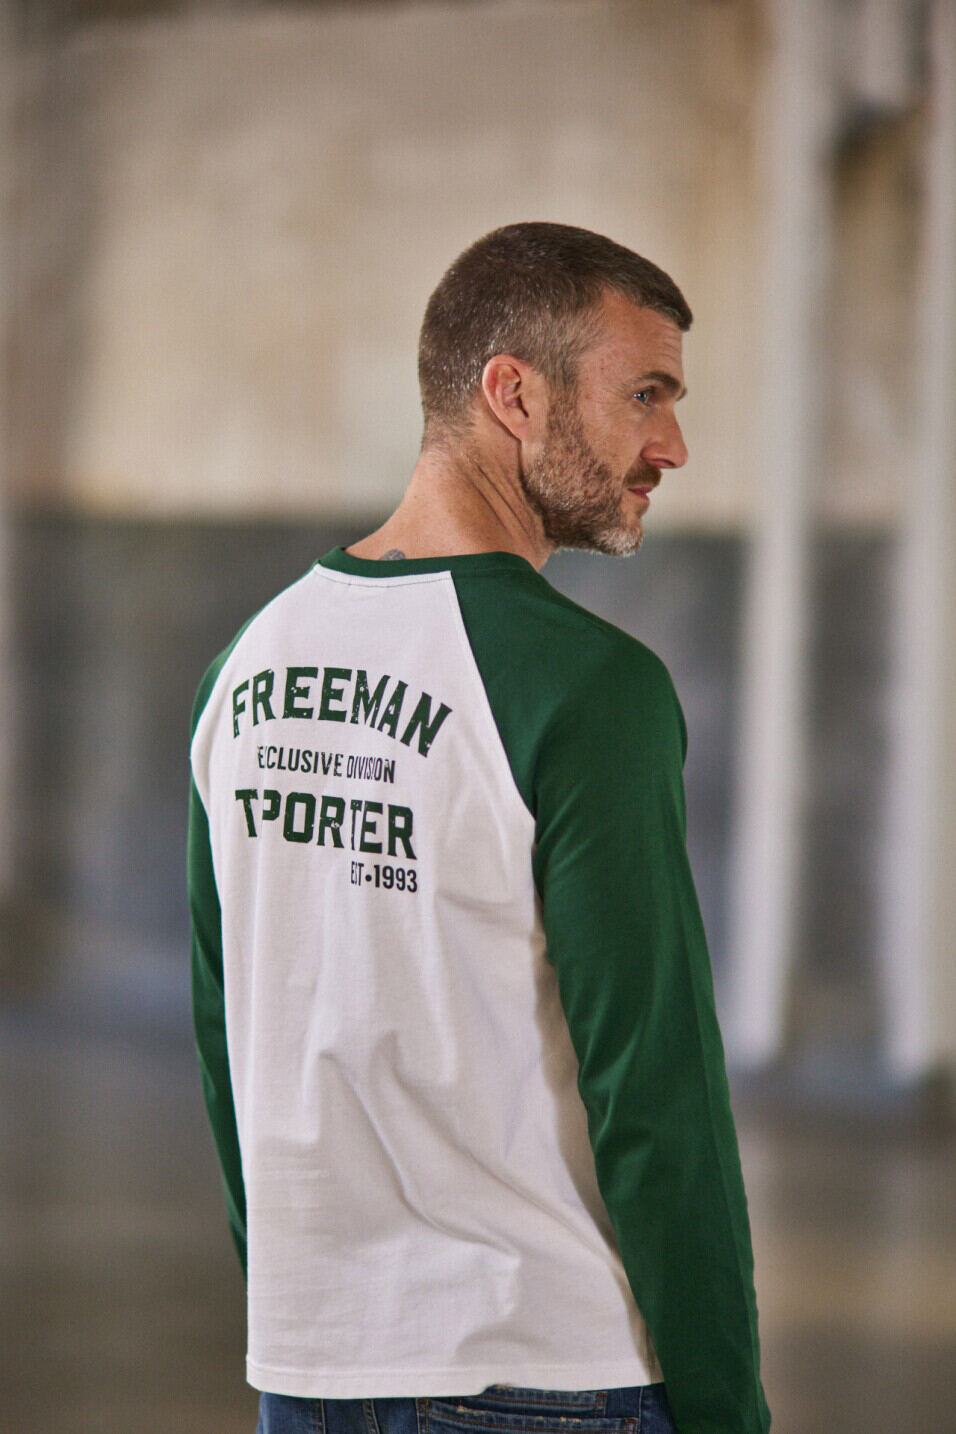 Gerades T-Shirt Man Christopher 93 White | Freeman T. Porter